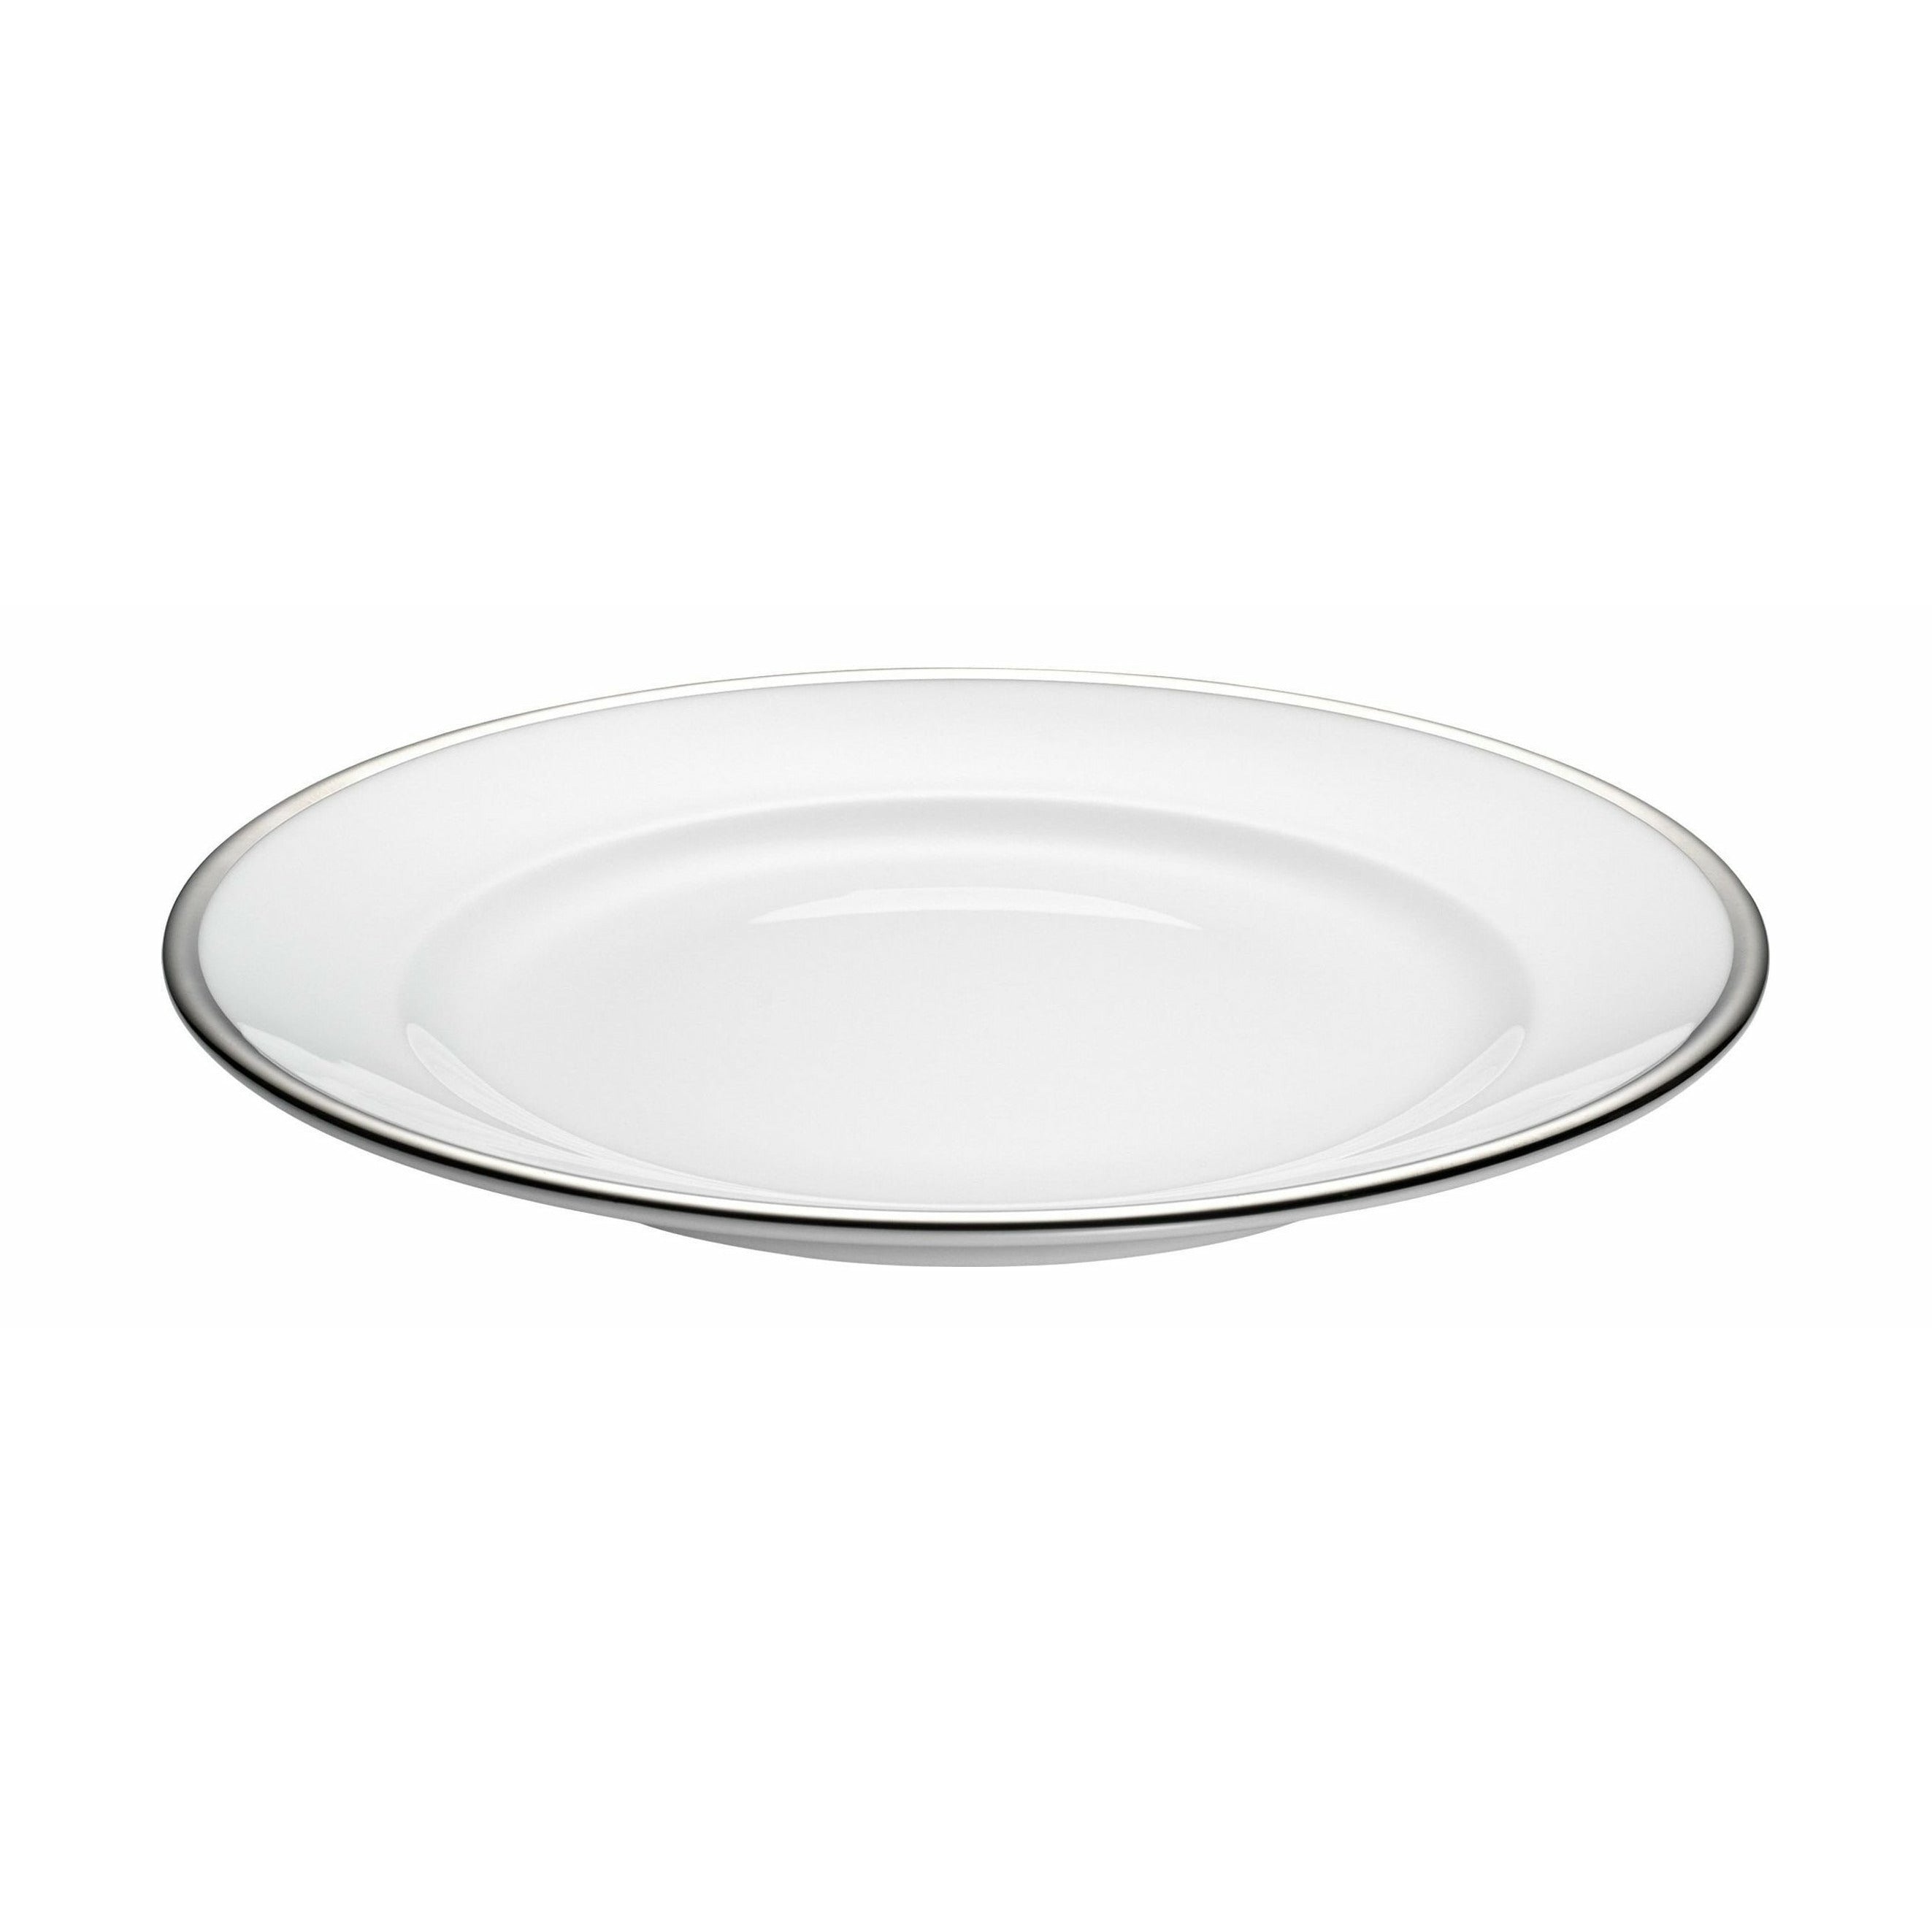 Pillivuyt Bistro Plate Ø 24 cm, blanco/plata